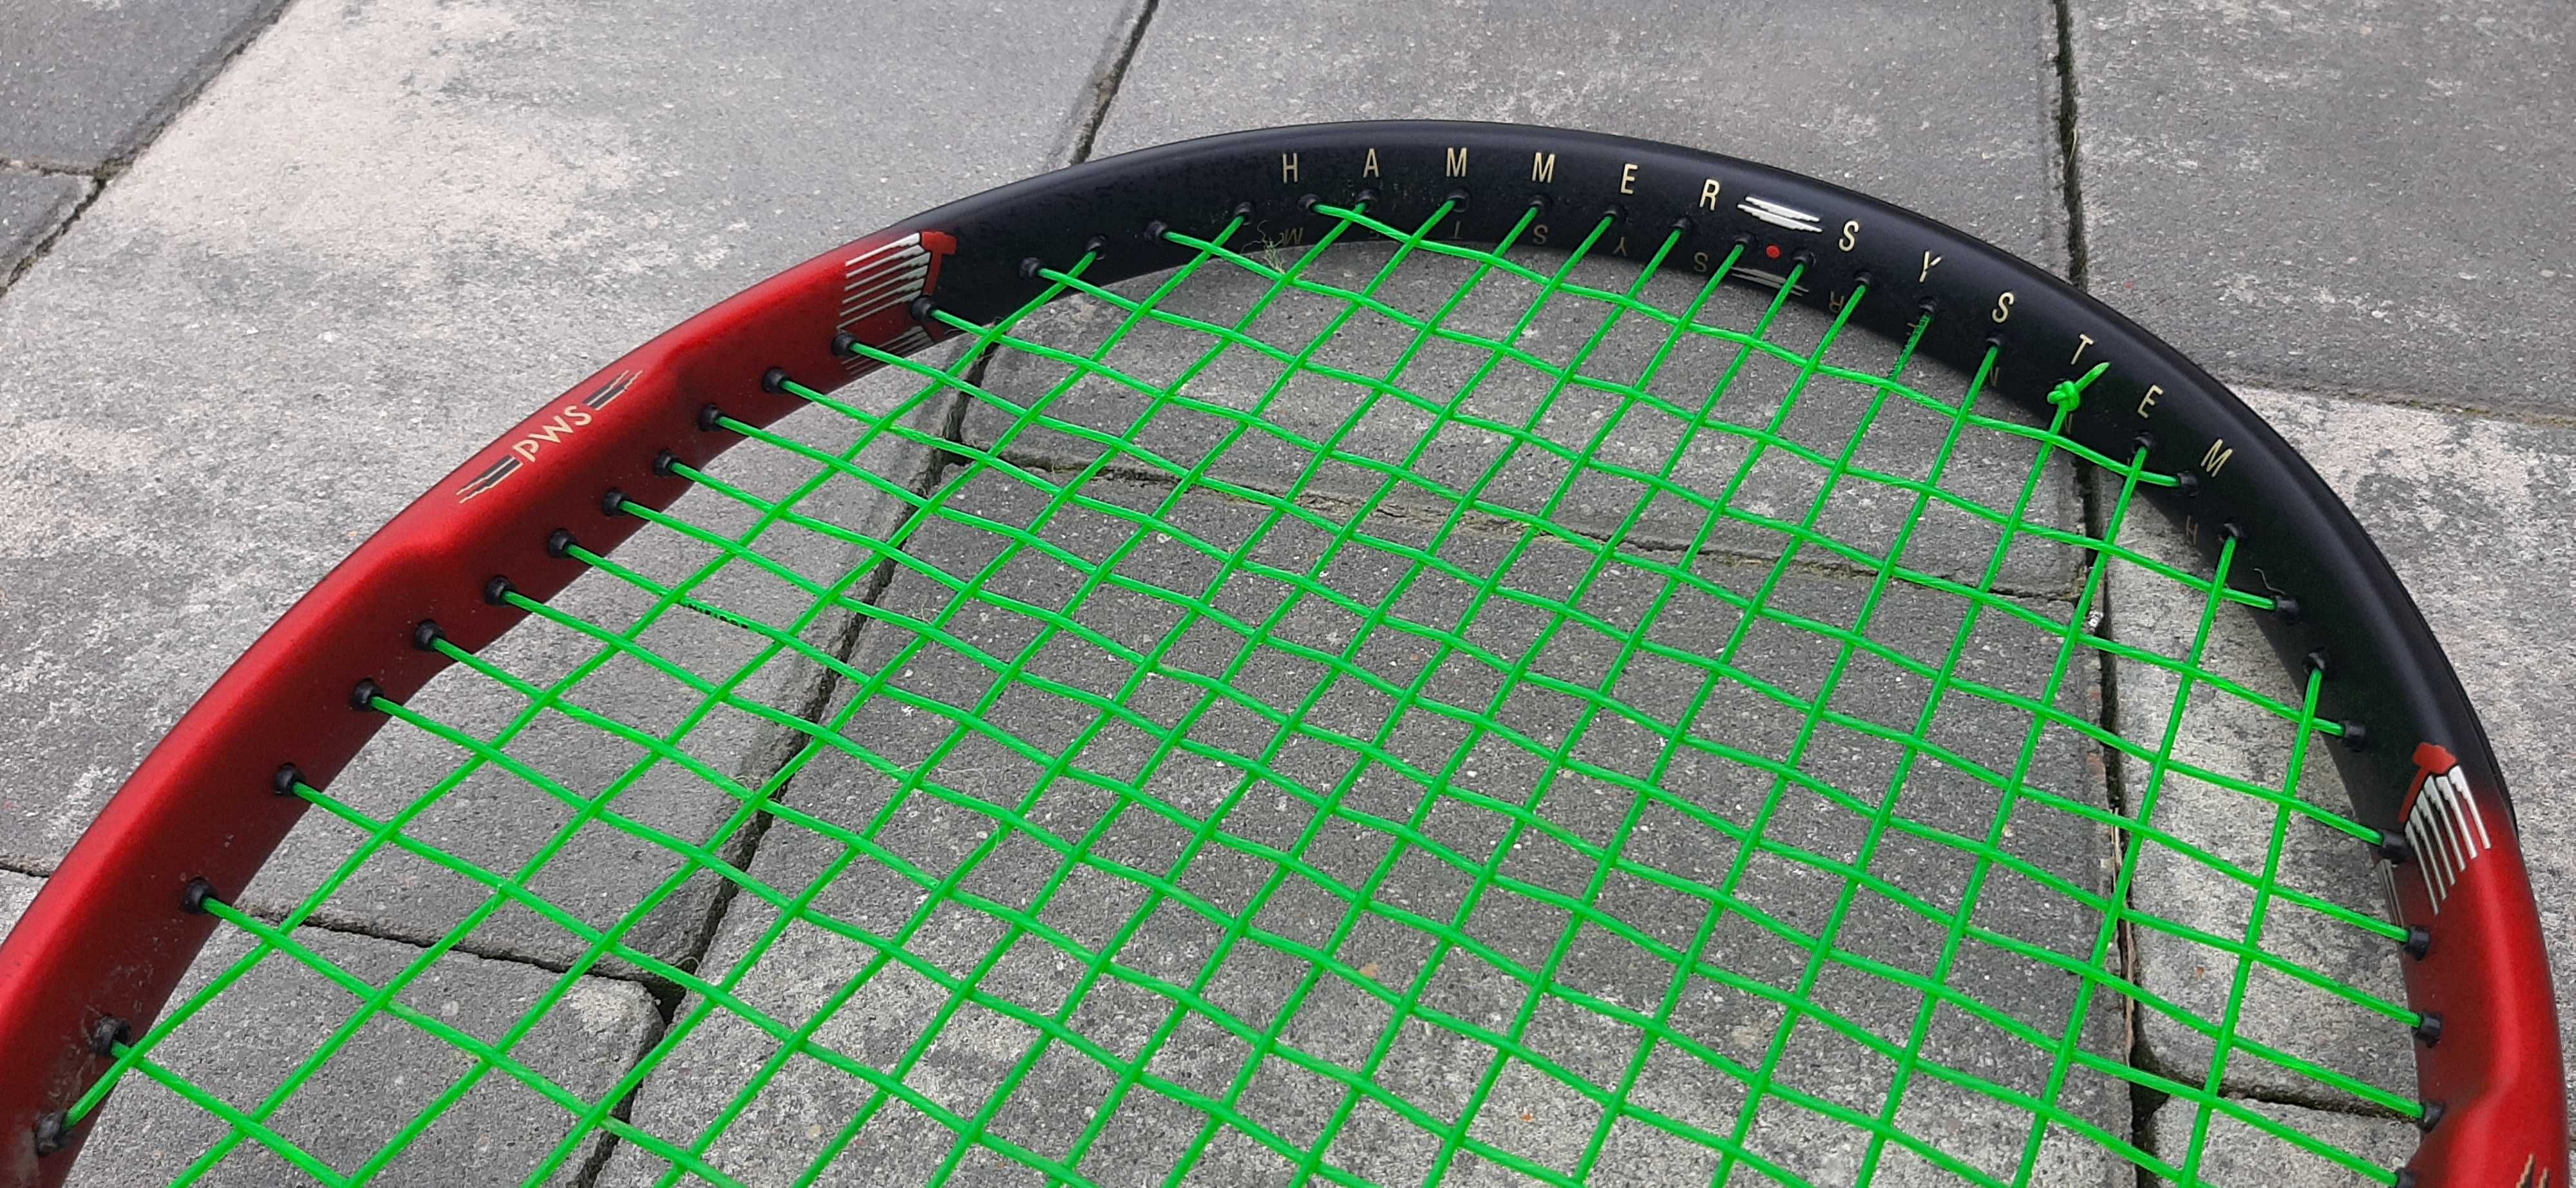 Wilson Hammer 5.9 rakieta tenisowa tenis